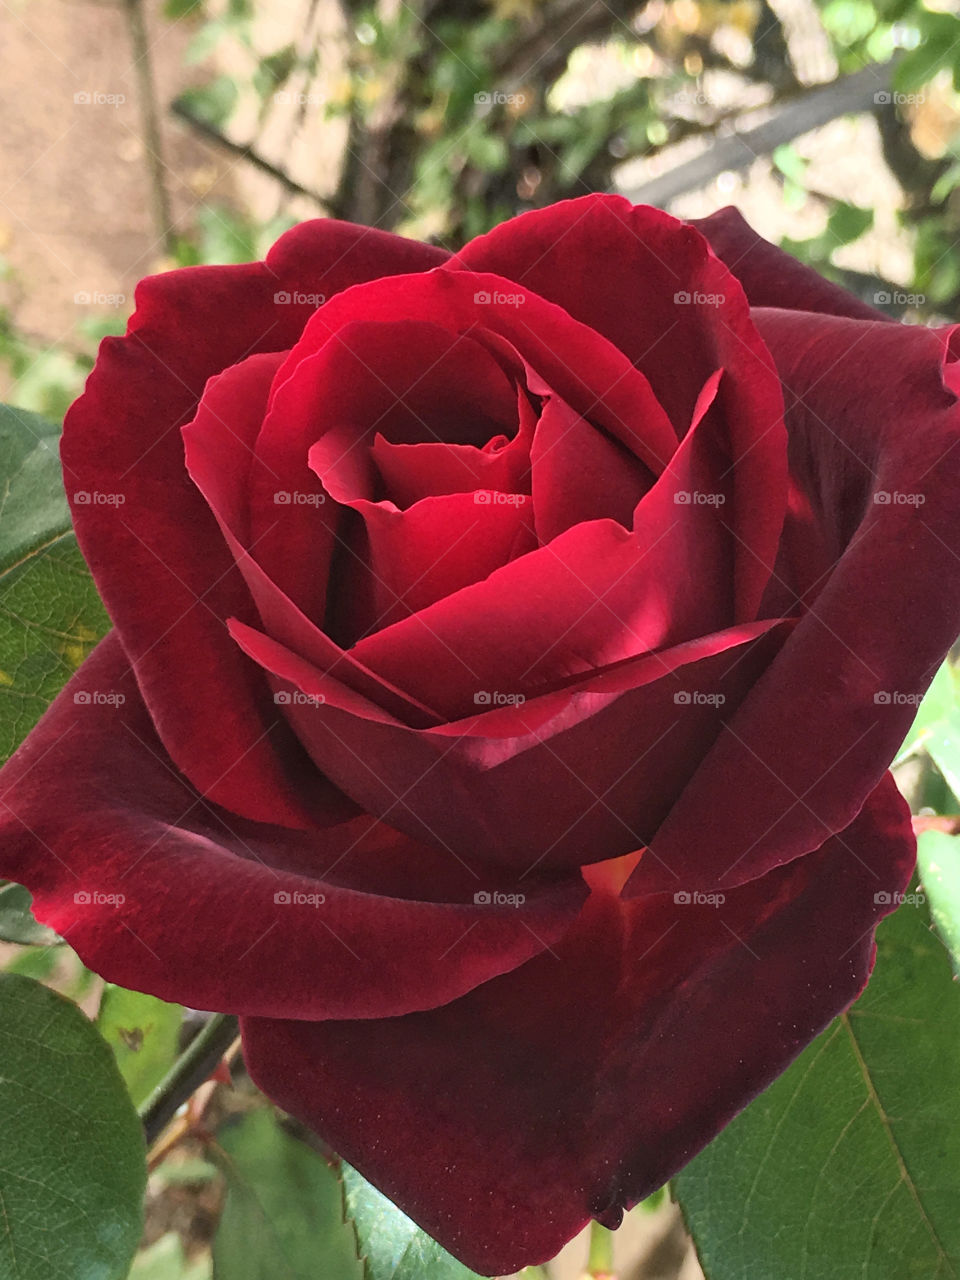 Red rose, flower